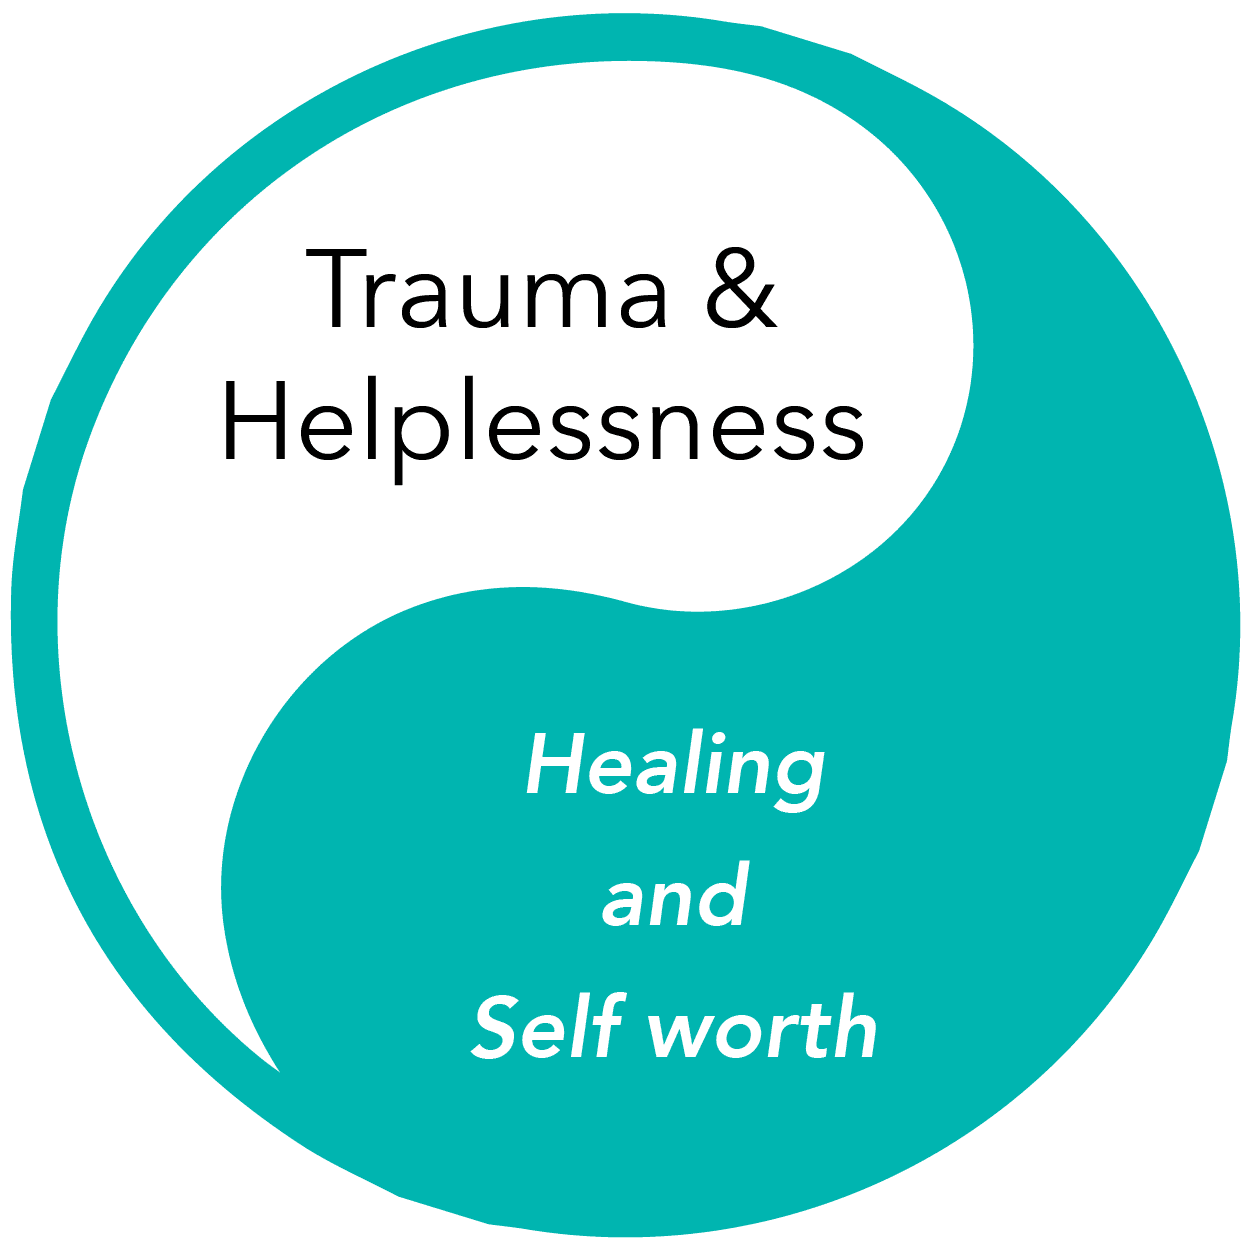 Trauma & Helplessness: Healing and Self worth